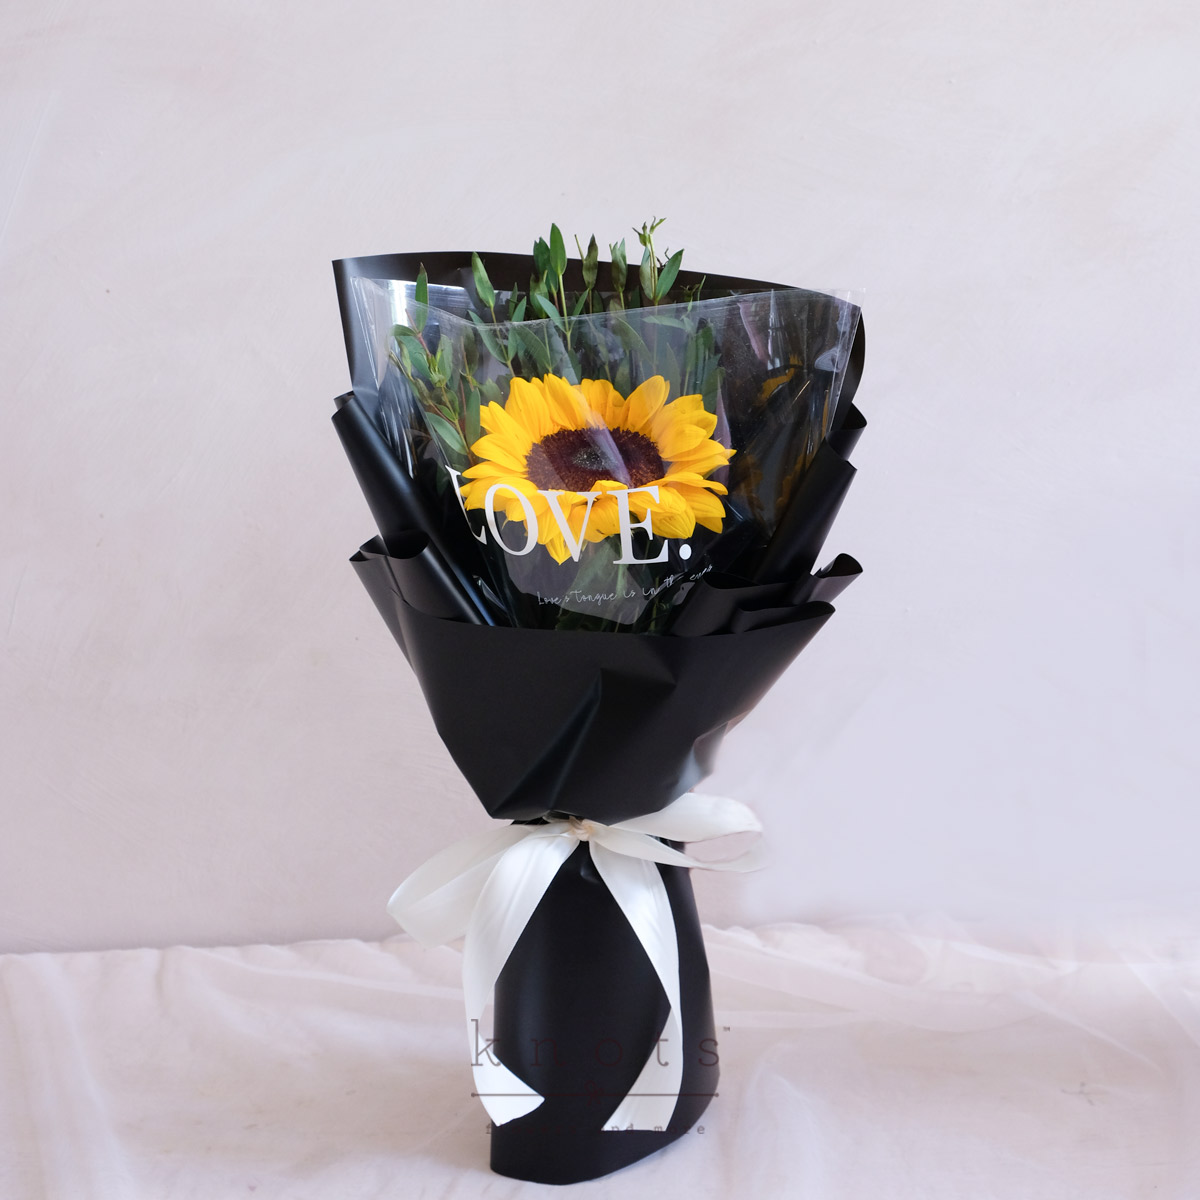 Sunny Heartstrings (Sunflower Bouquet)